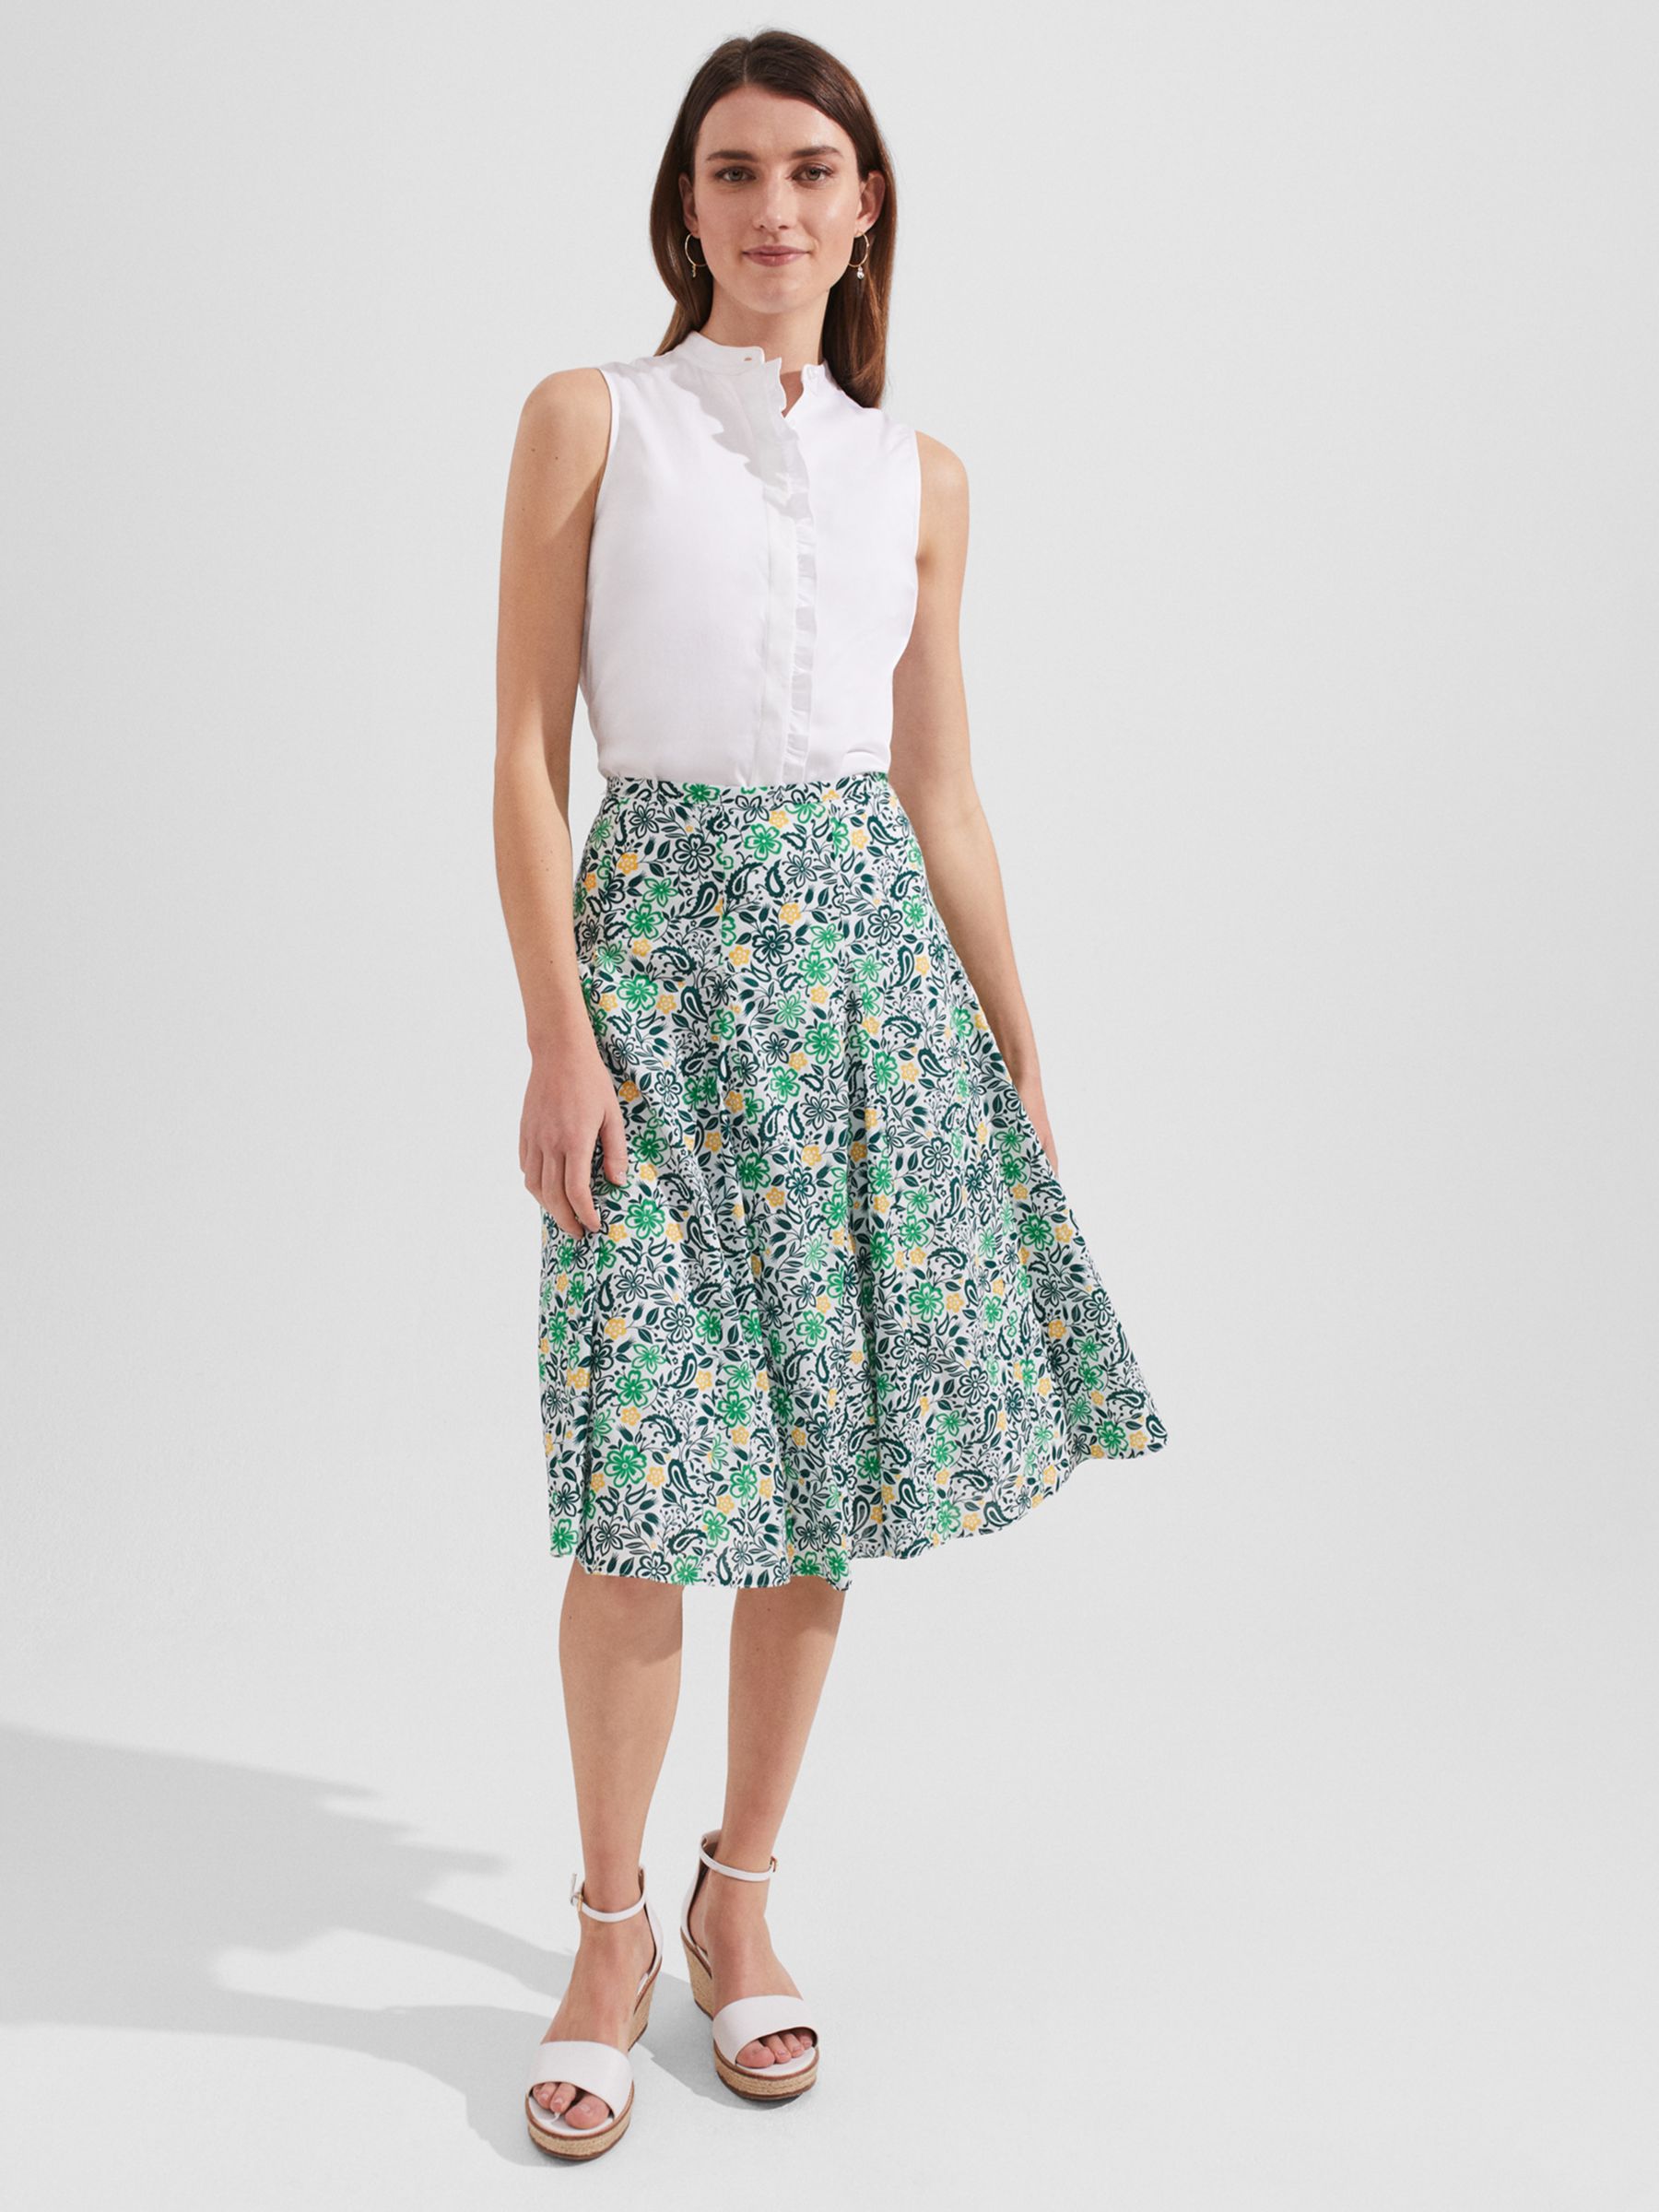 Hobbs Melina Floral Print Skirt, White/Multi at John Lewis & Partners